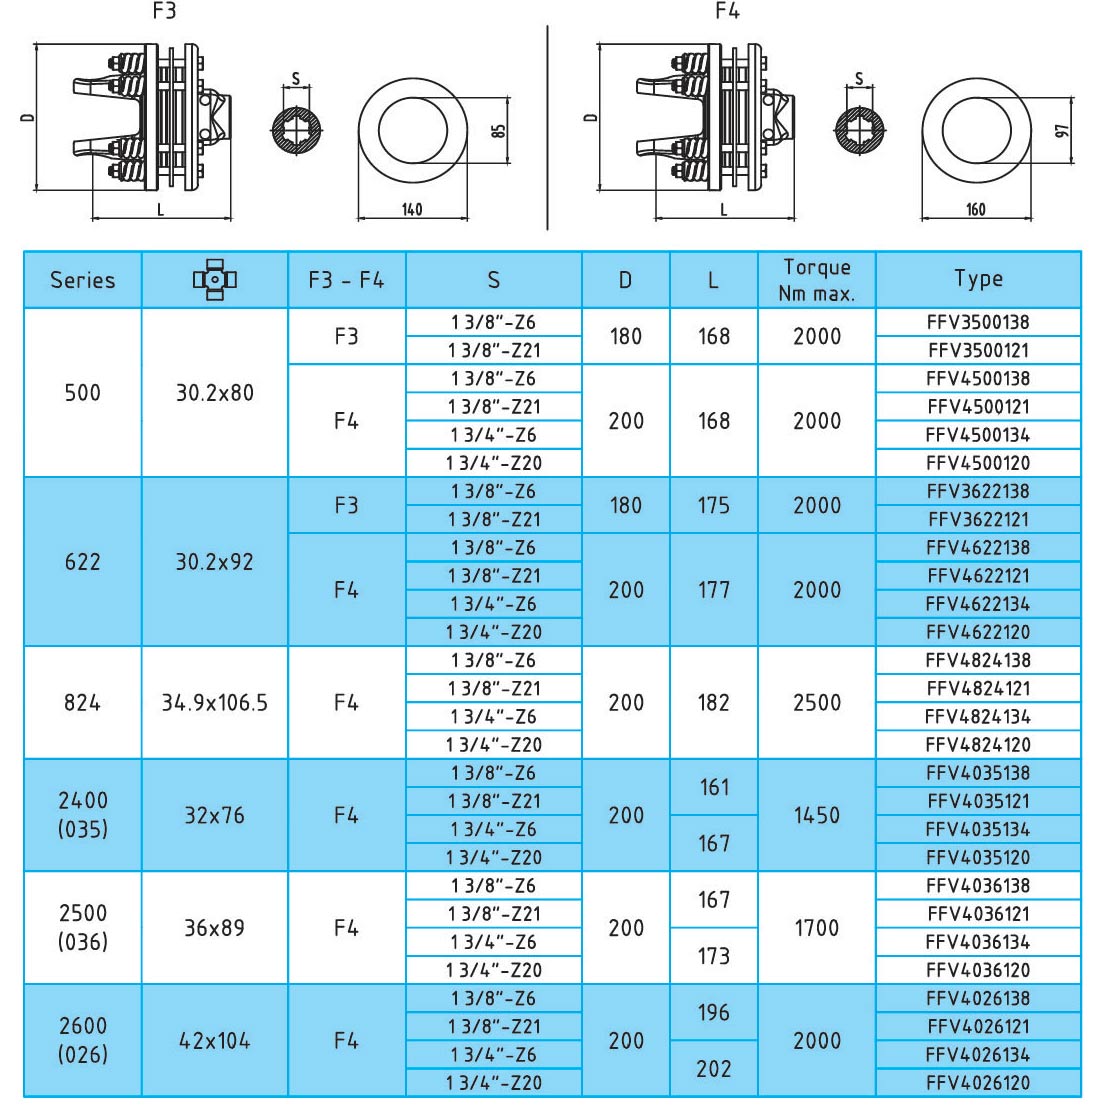 Friction torque limiter  FFV3-FFV4 Series for PTO drive shafes